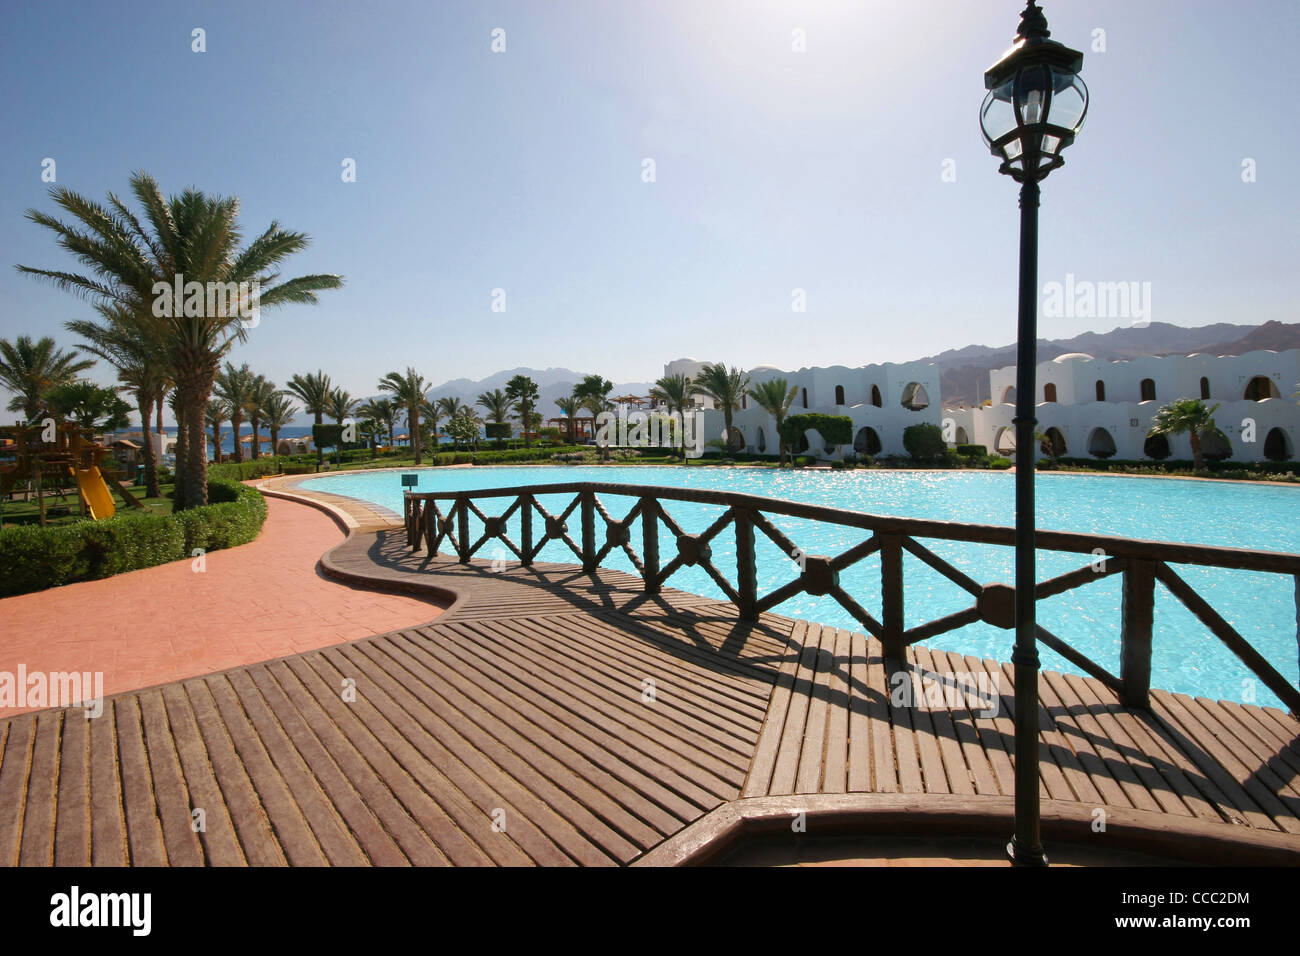 Hilton Hotel, Dahab, Egypt, North Africa, Africa Stock Photo